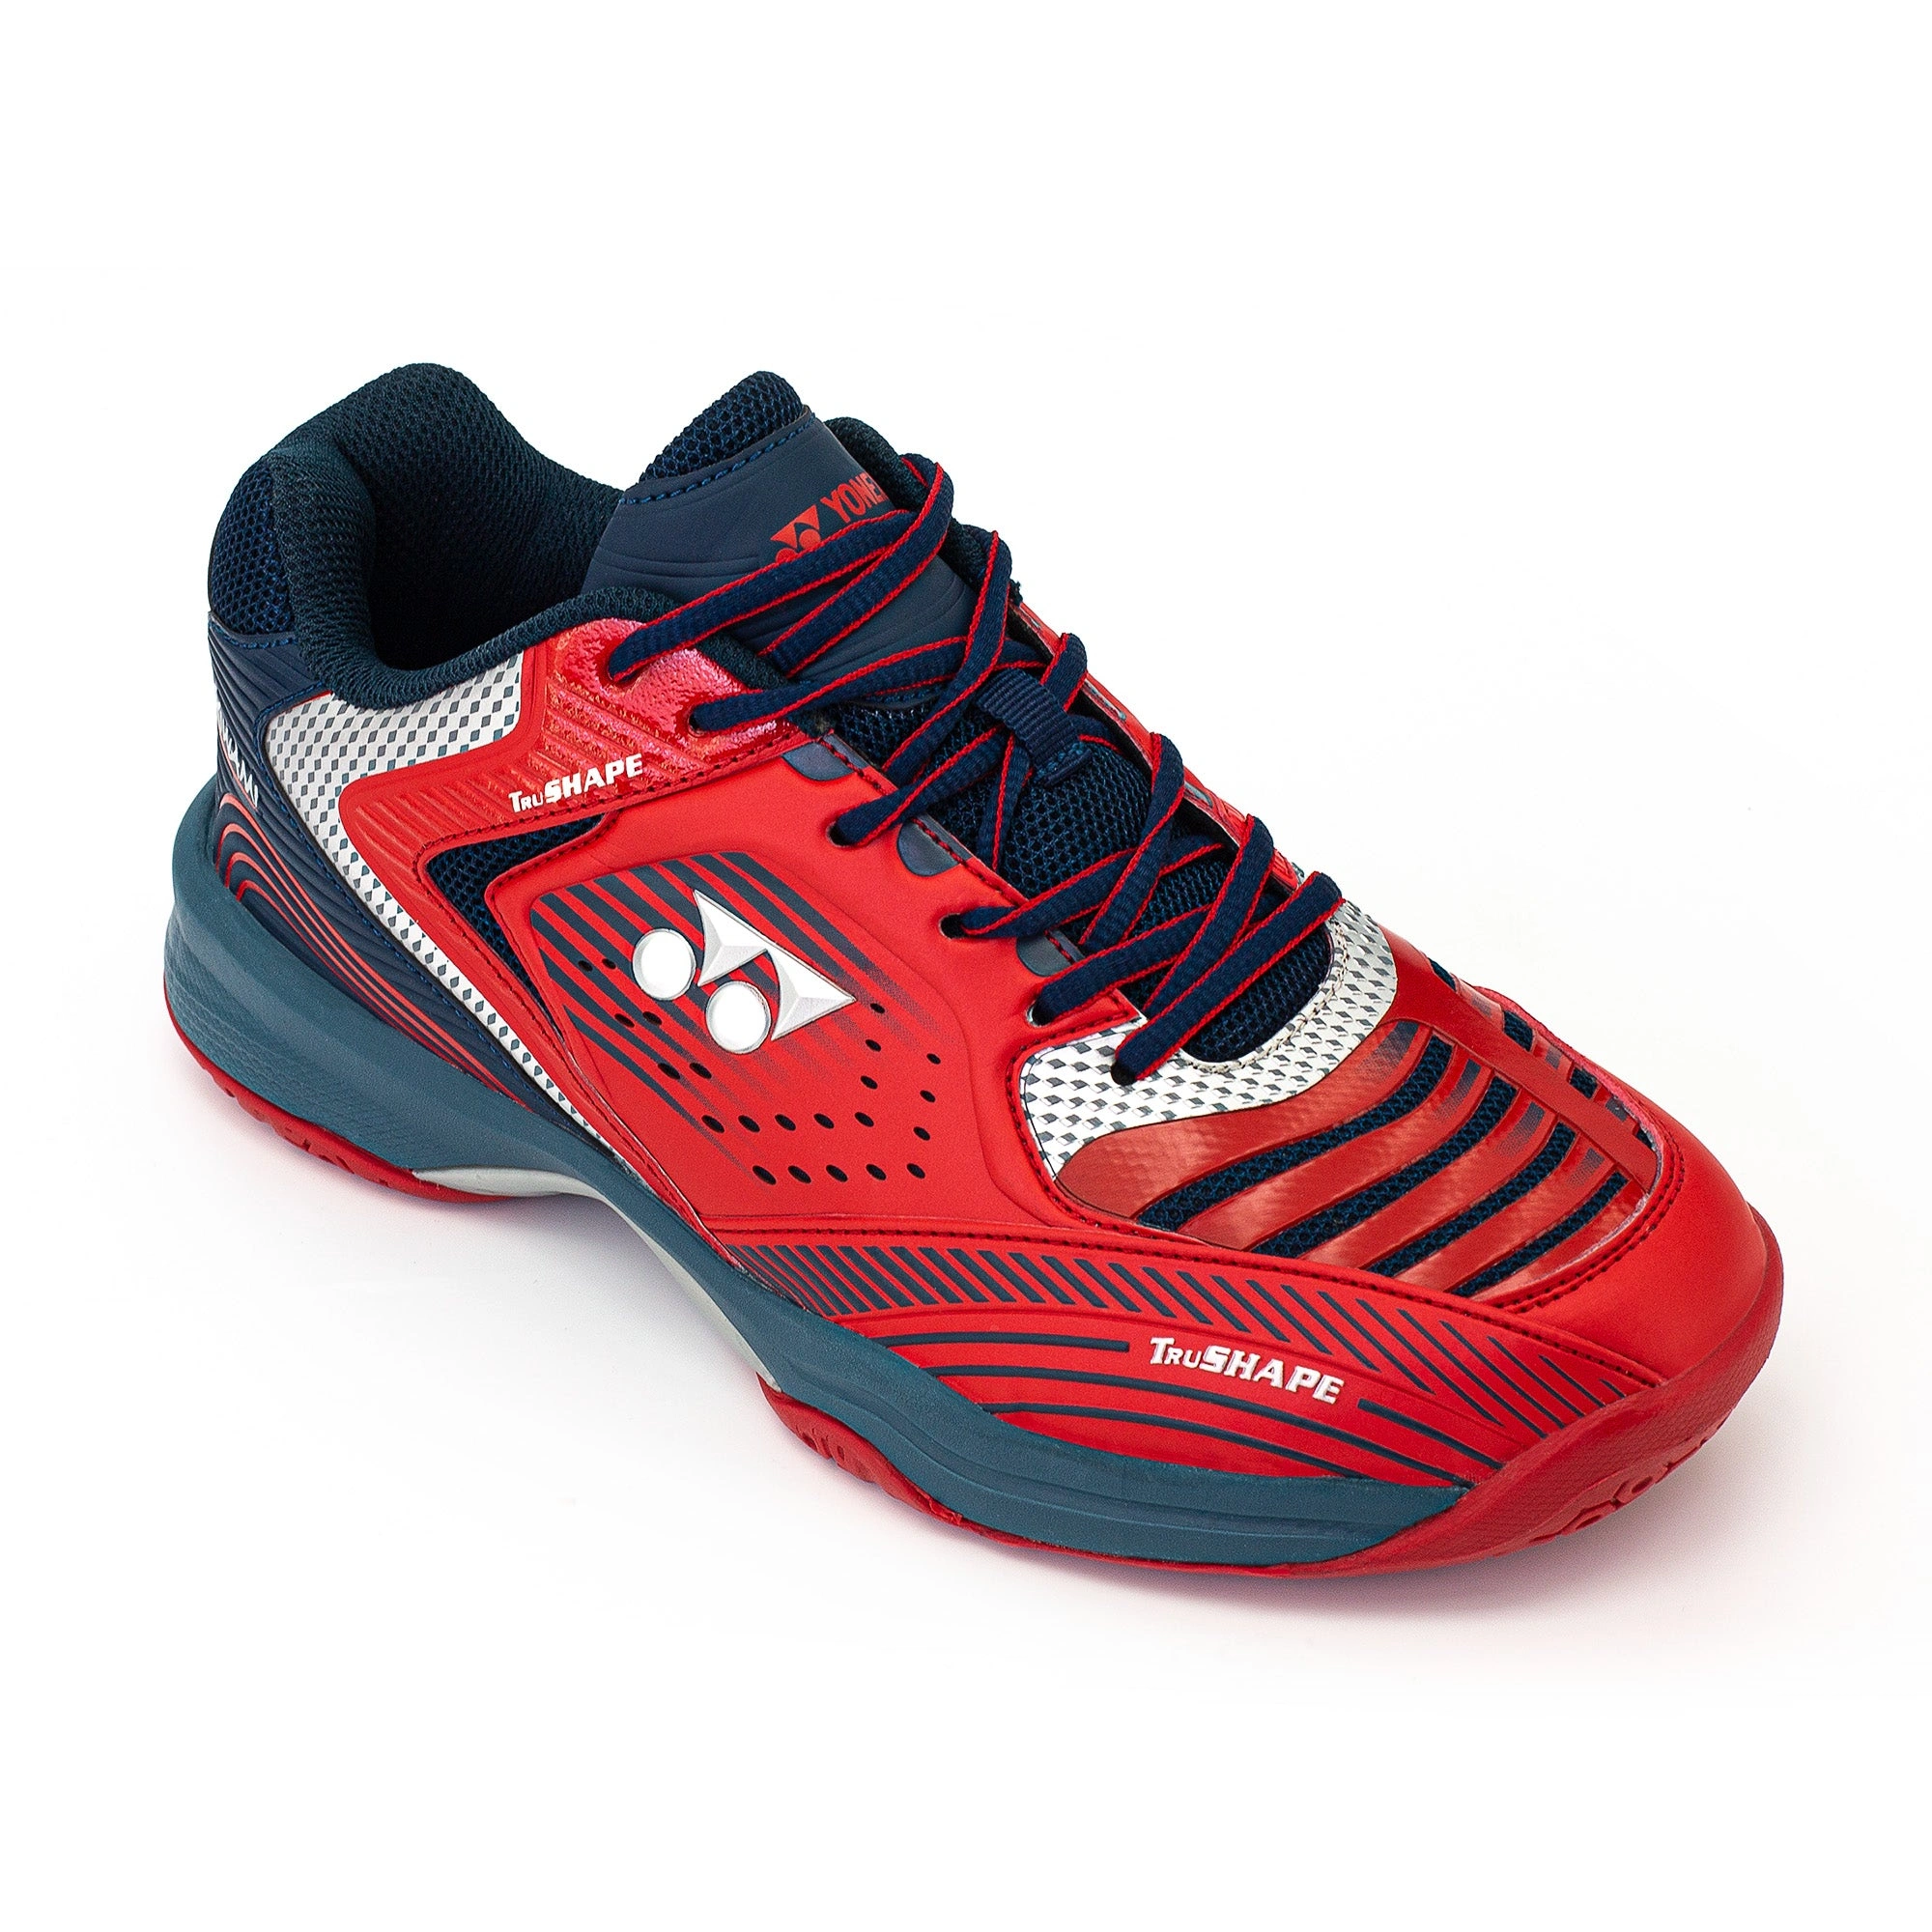 Yonex Kiwami Badminton Shoes For Men-FADDED RED DARK OCEANIC-6-1